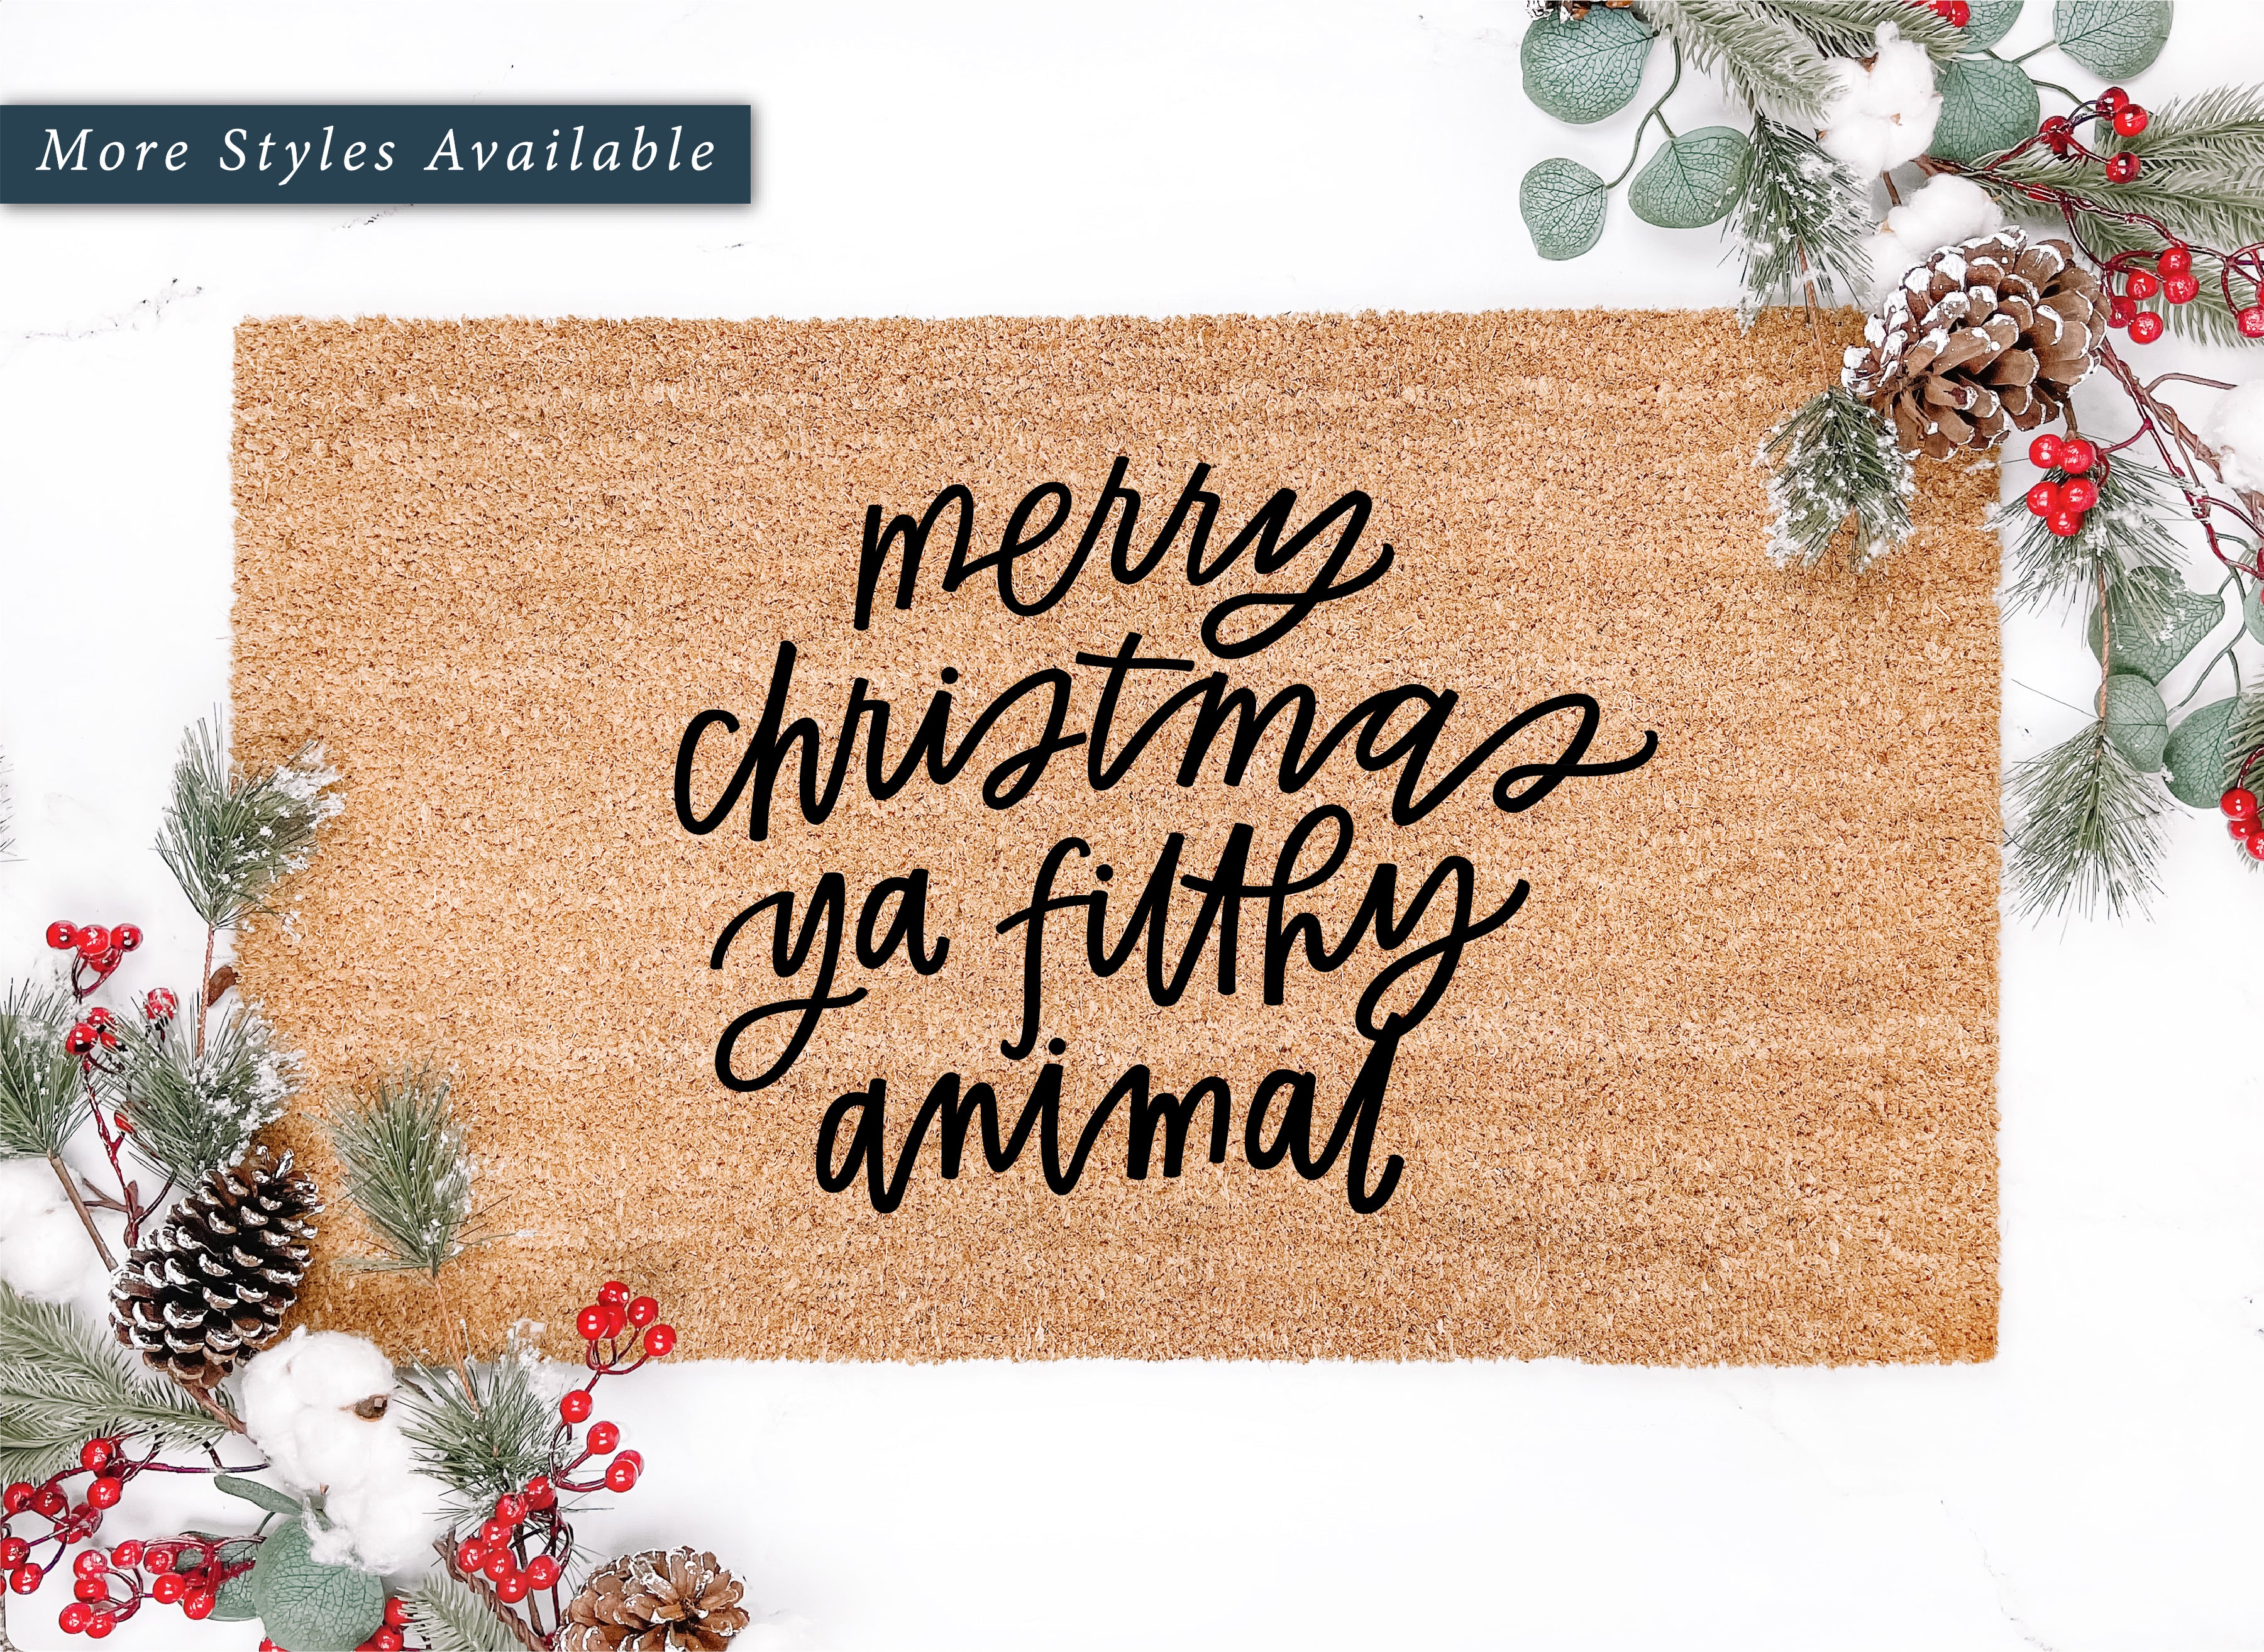 Merry Christmas Ya Filthy Animal v2 Doormat